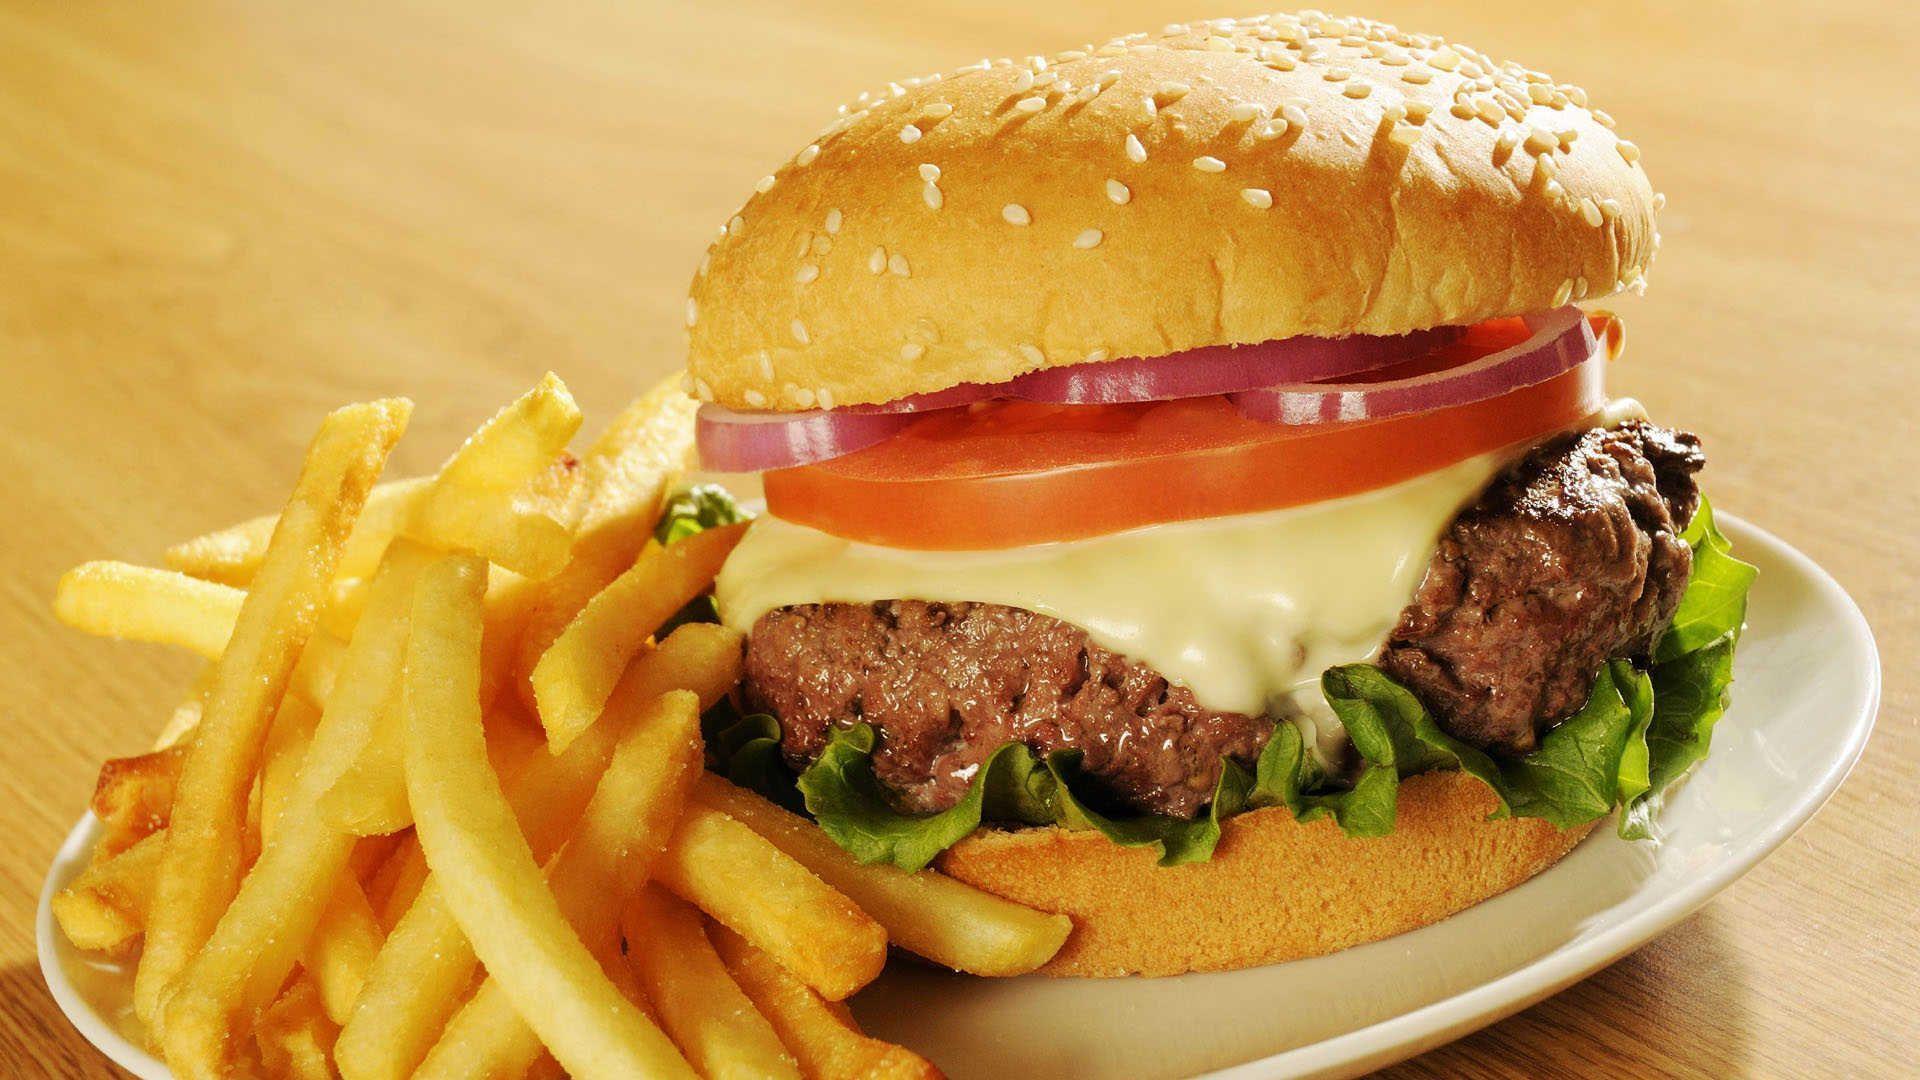 Burger Wallpaper 8. Foods Wallpaper. Burgers and Food